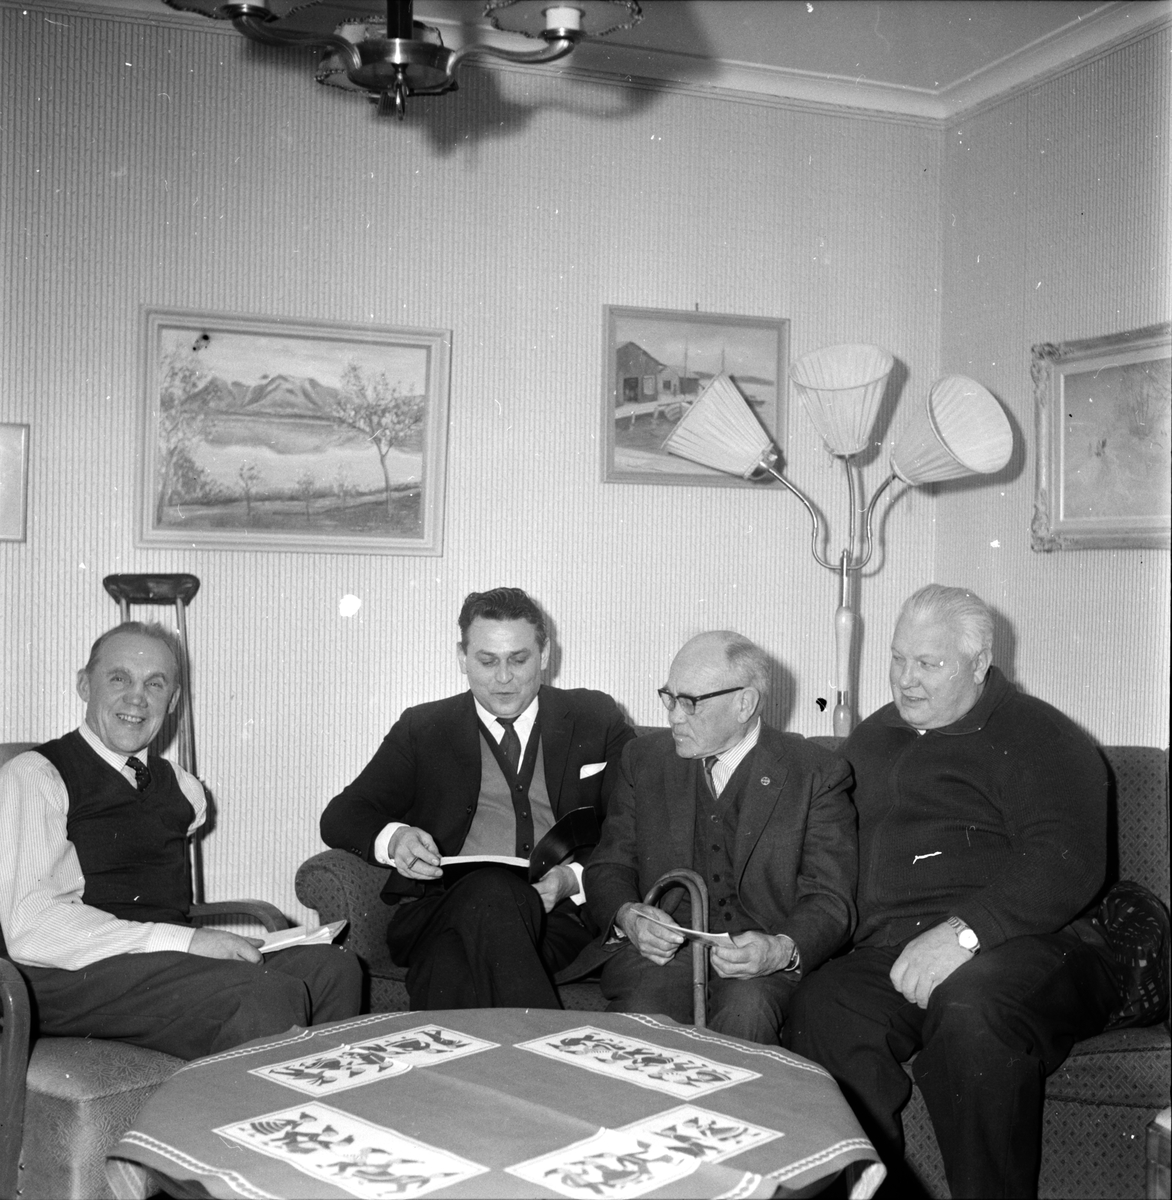 Hälsingeklippan DVR,
Får en check på 3000 kr av Lion i Bollnäs,
16 December 1964